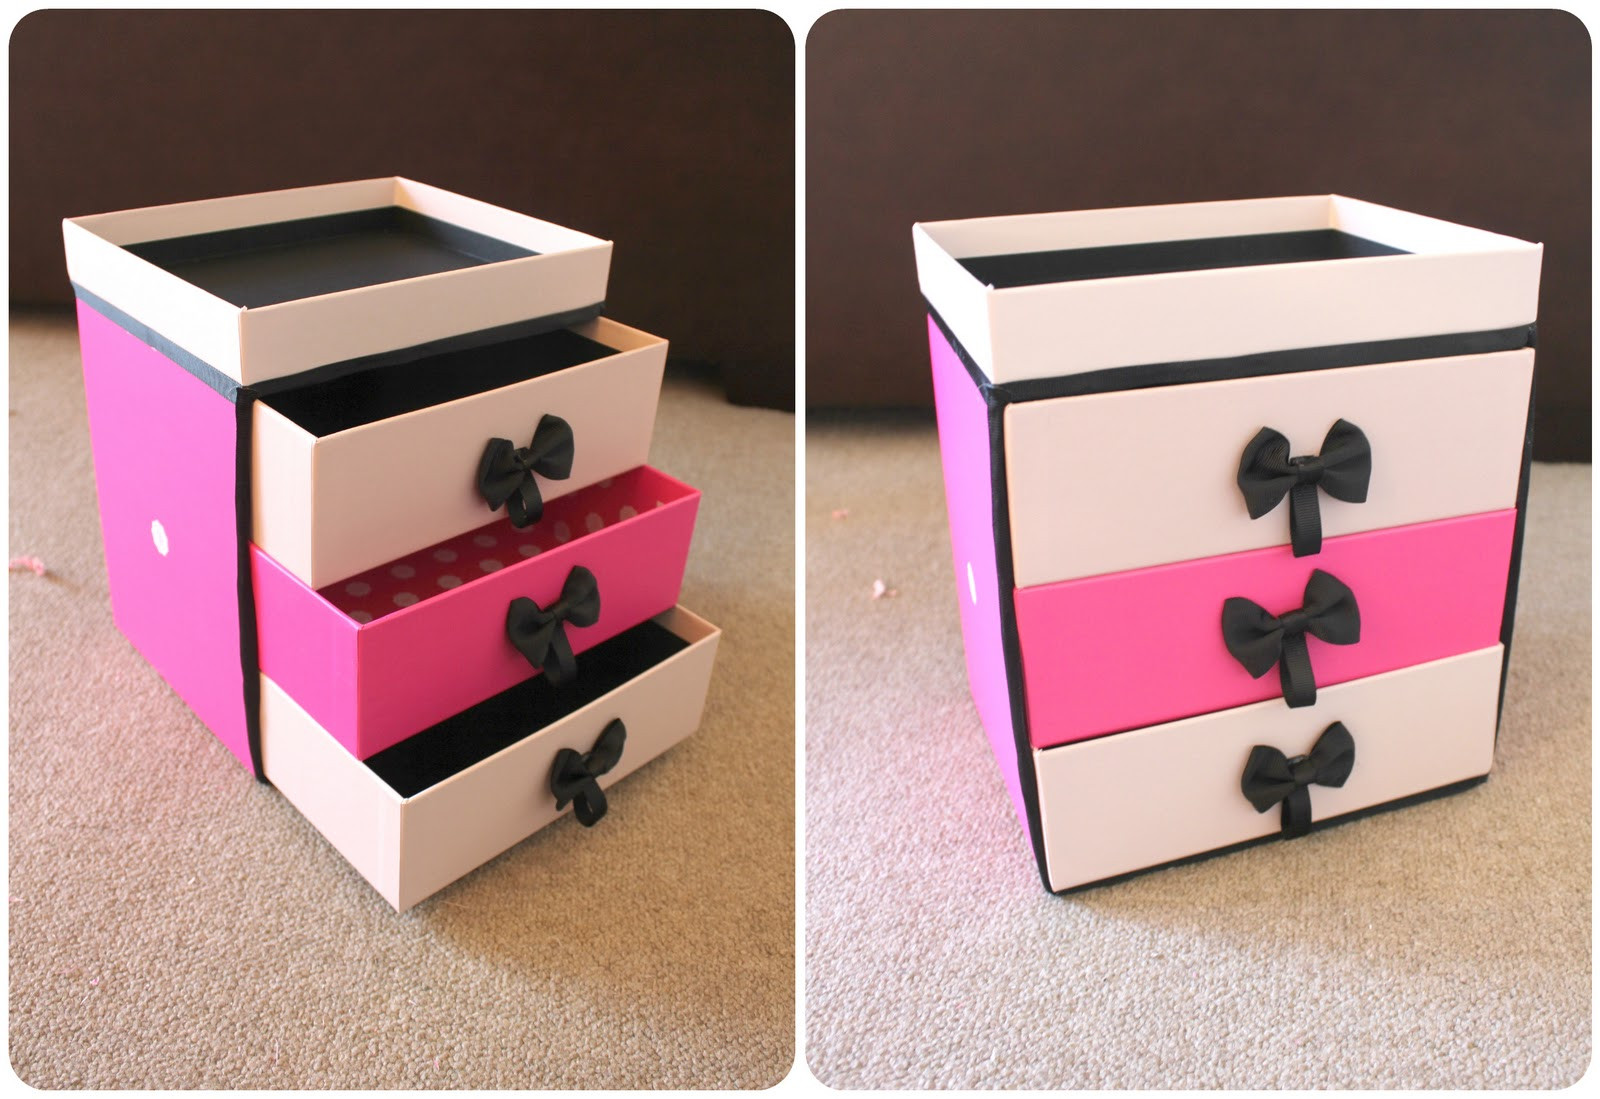 Best ideas about DIY Storage Boxes
. Save or Pin Peachfizzz DIY Make Up Storage Now.